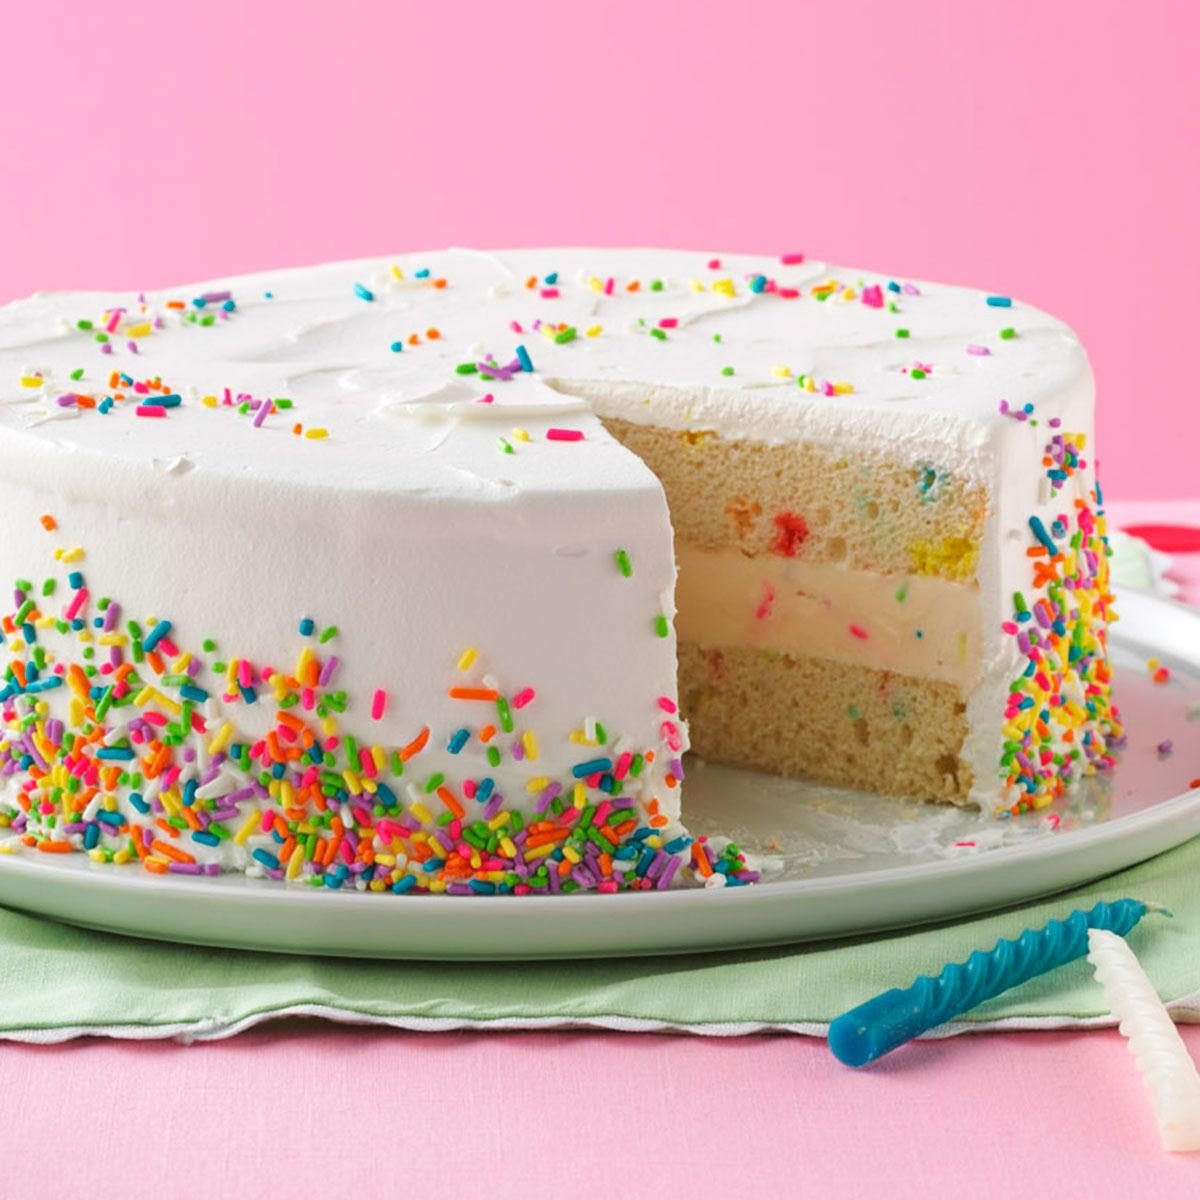 Ice Cream Birthday Cake Recipe: How to Make It